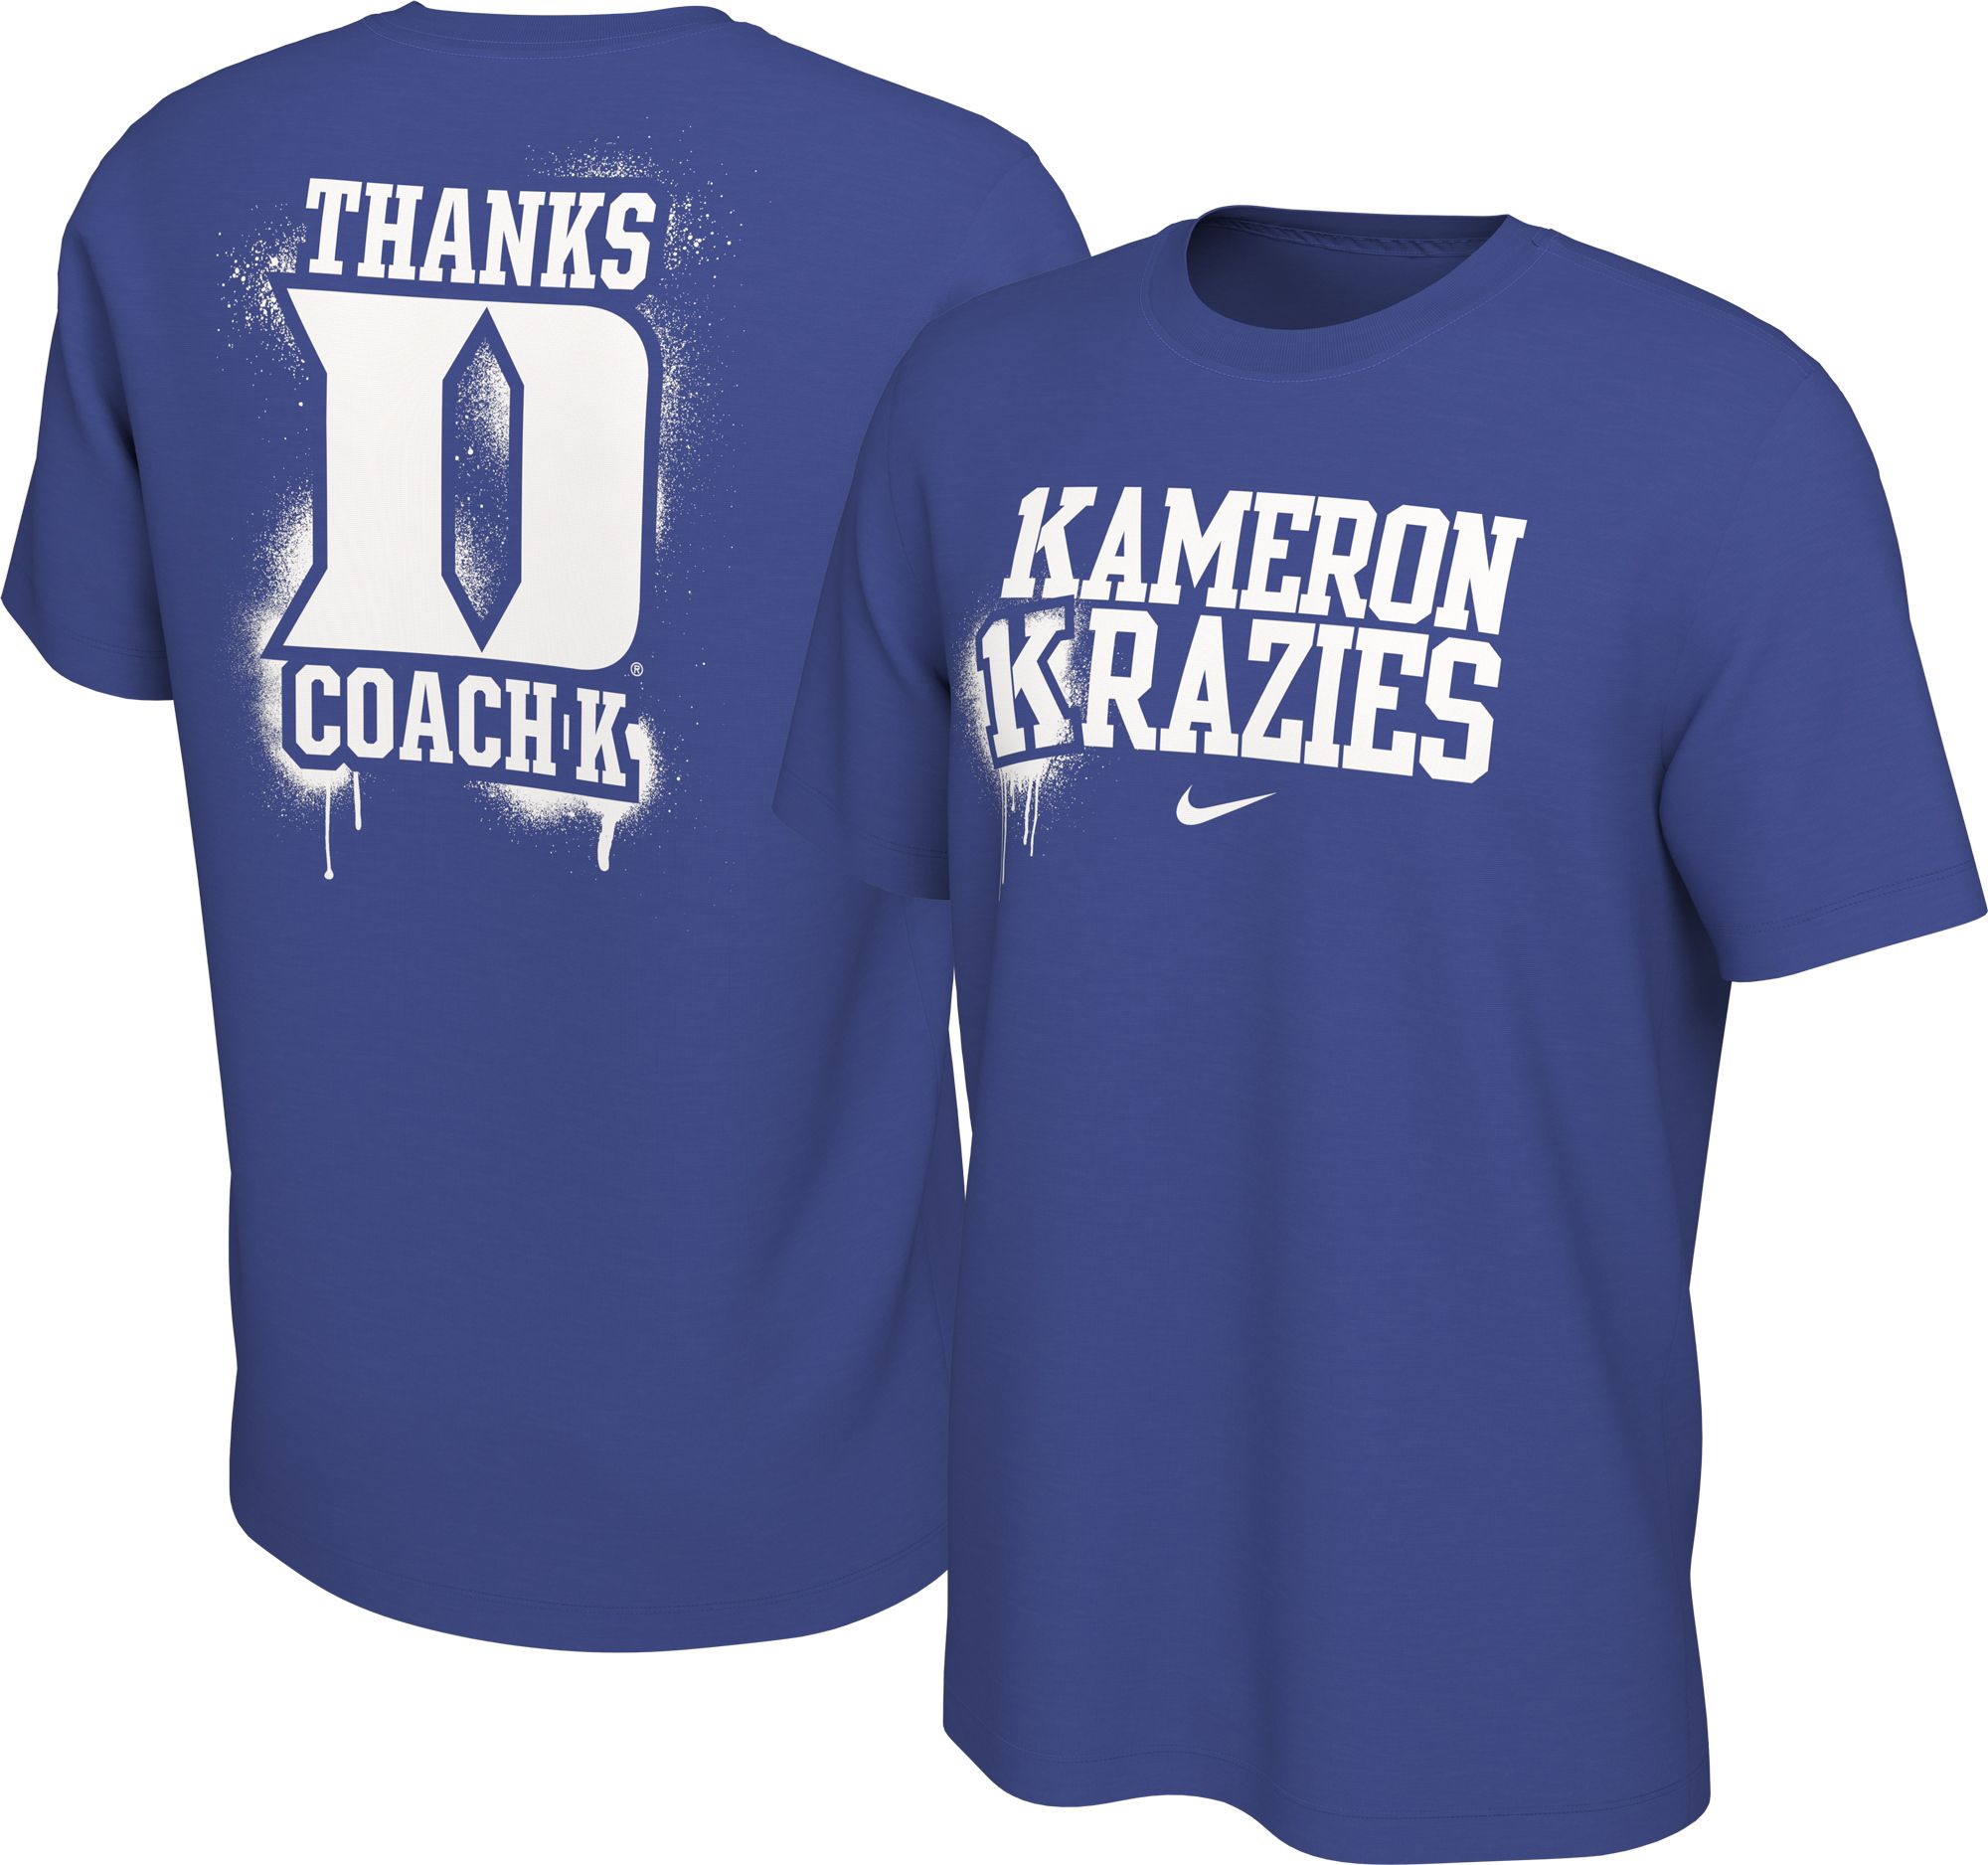 Nike / Men's Duke Blue Devils 'Kameron Krazies' Coach K Retirement Duke  Blue T-Shirt